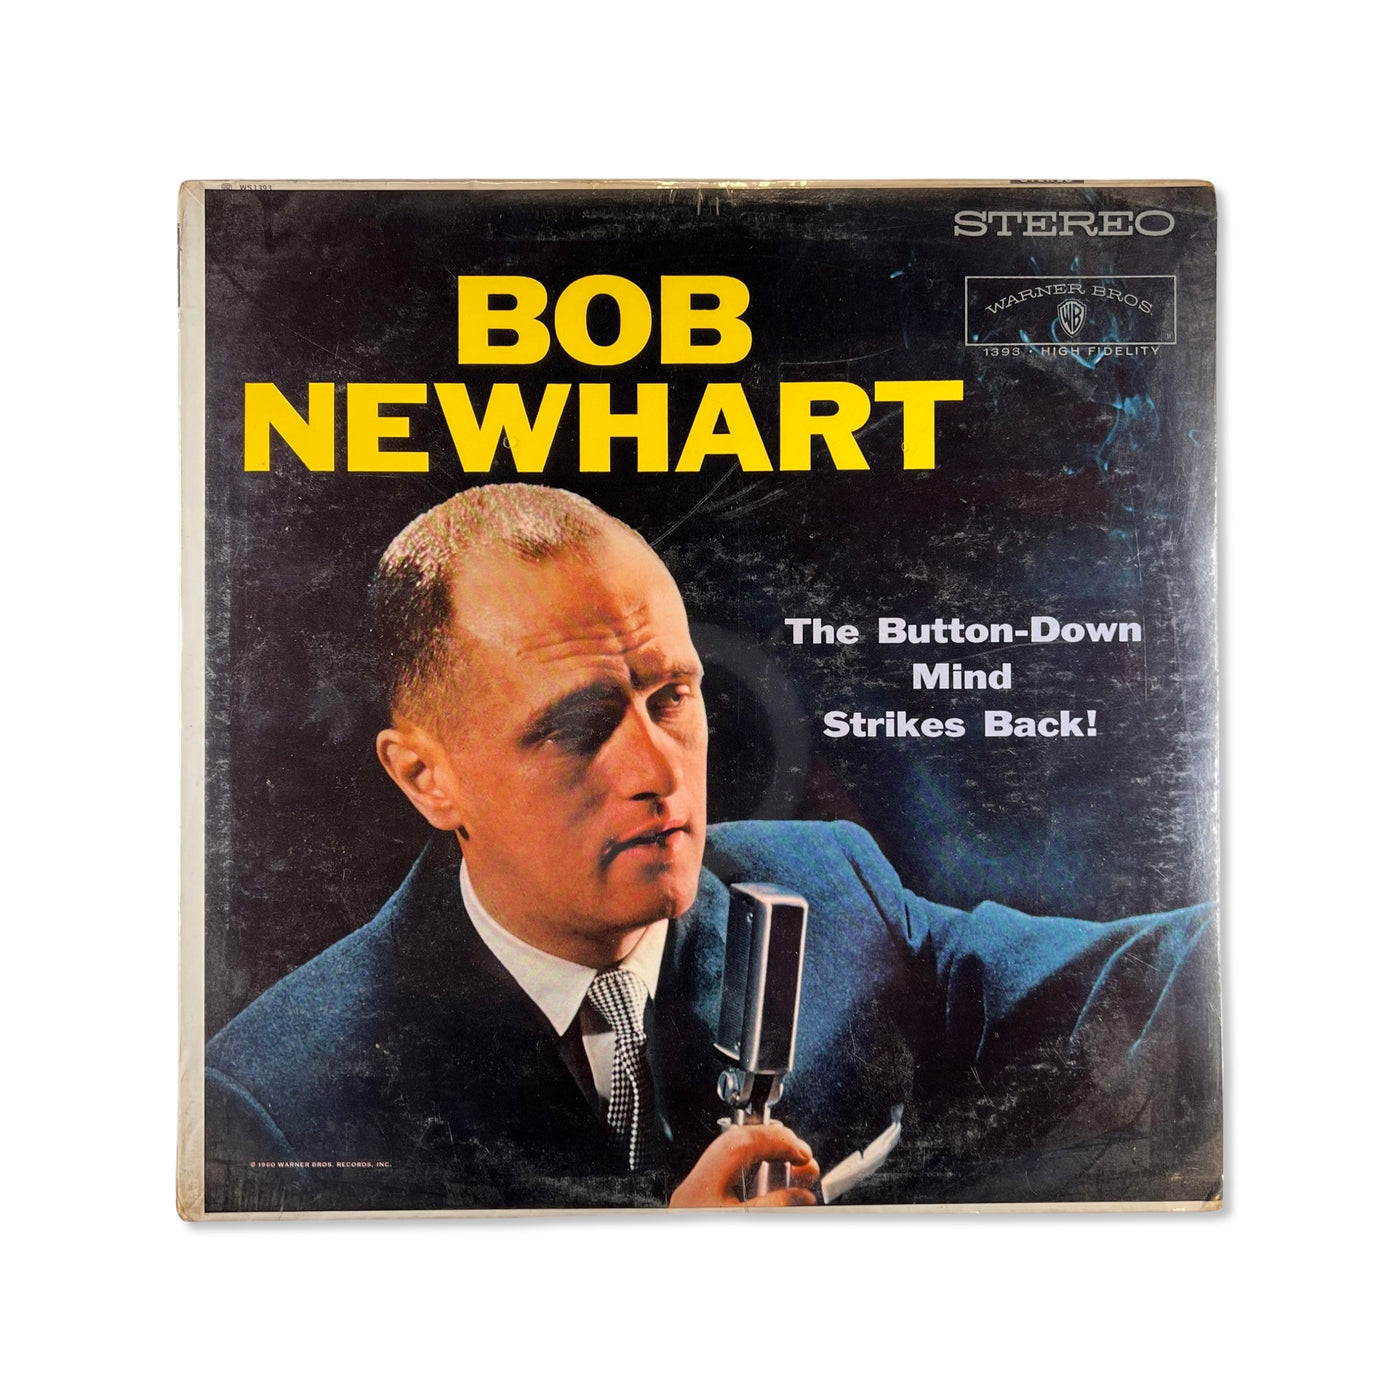 Bob Newhart – The Button-Down Mind Strikes Back!